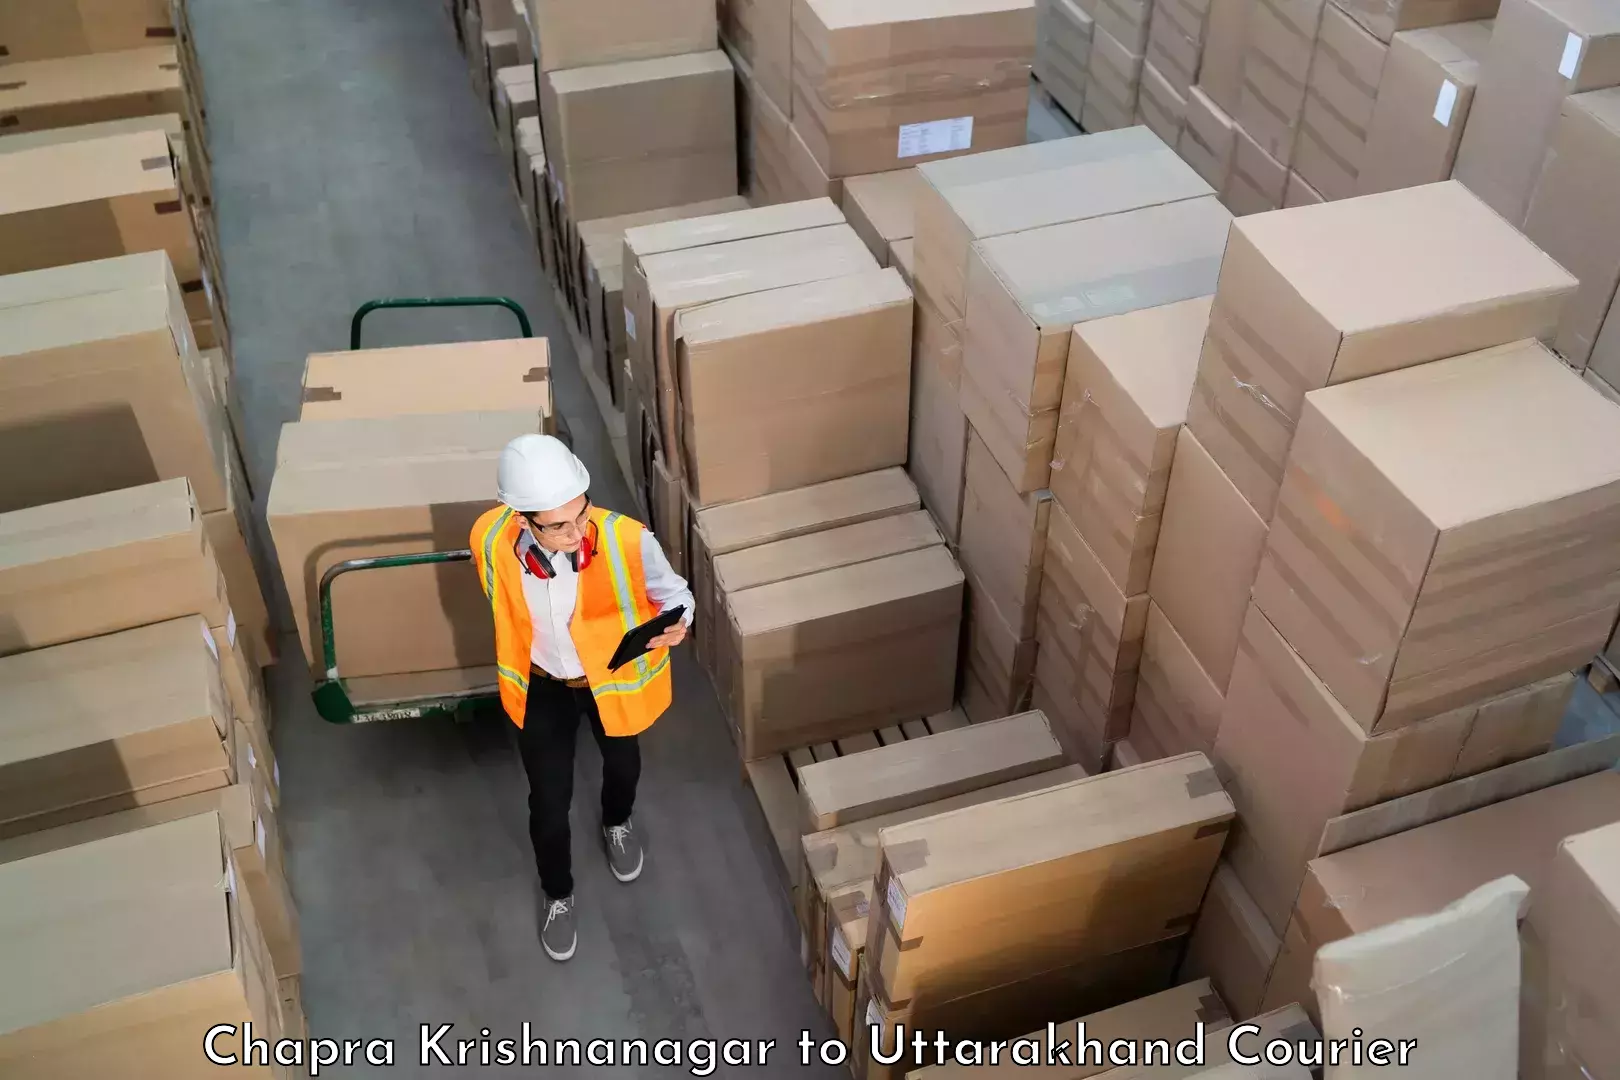 Baggage shipping experience Chapra Krishnanagar to Rishikesh